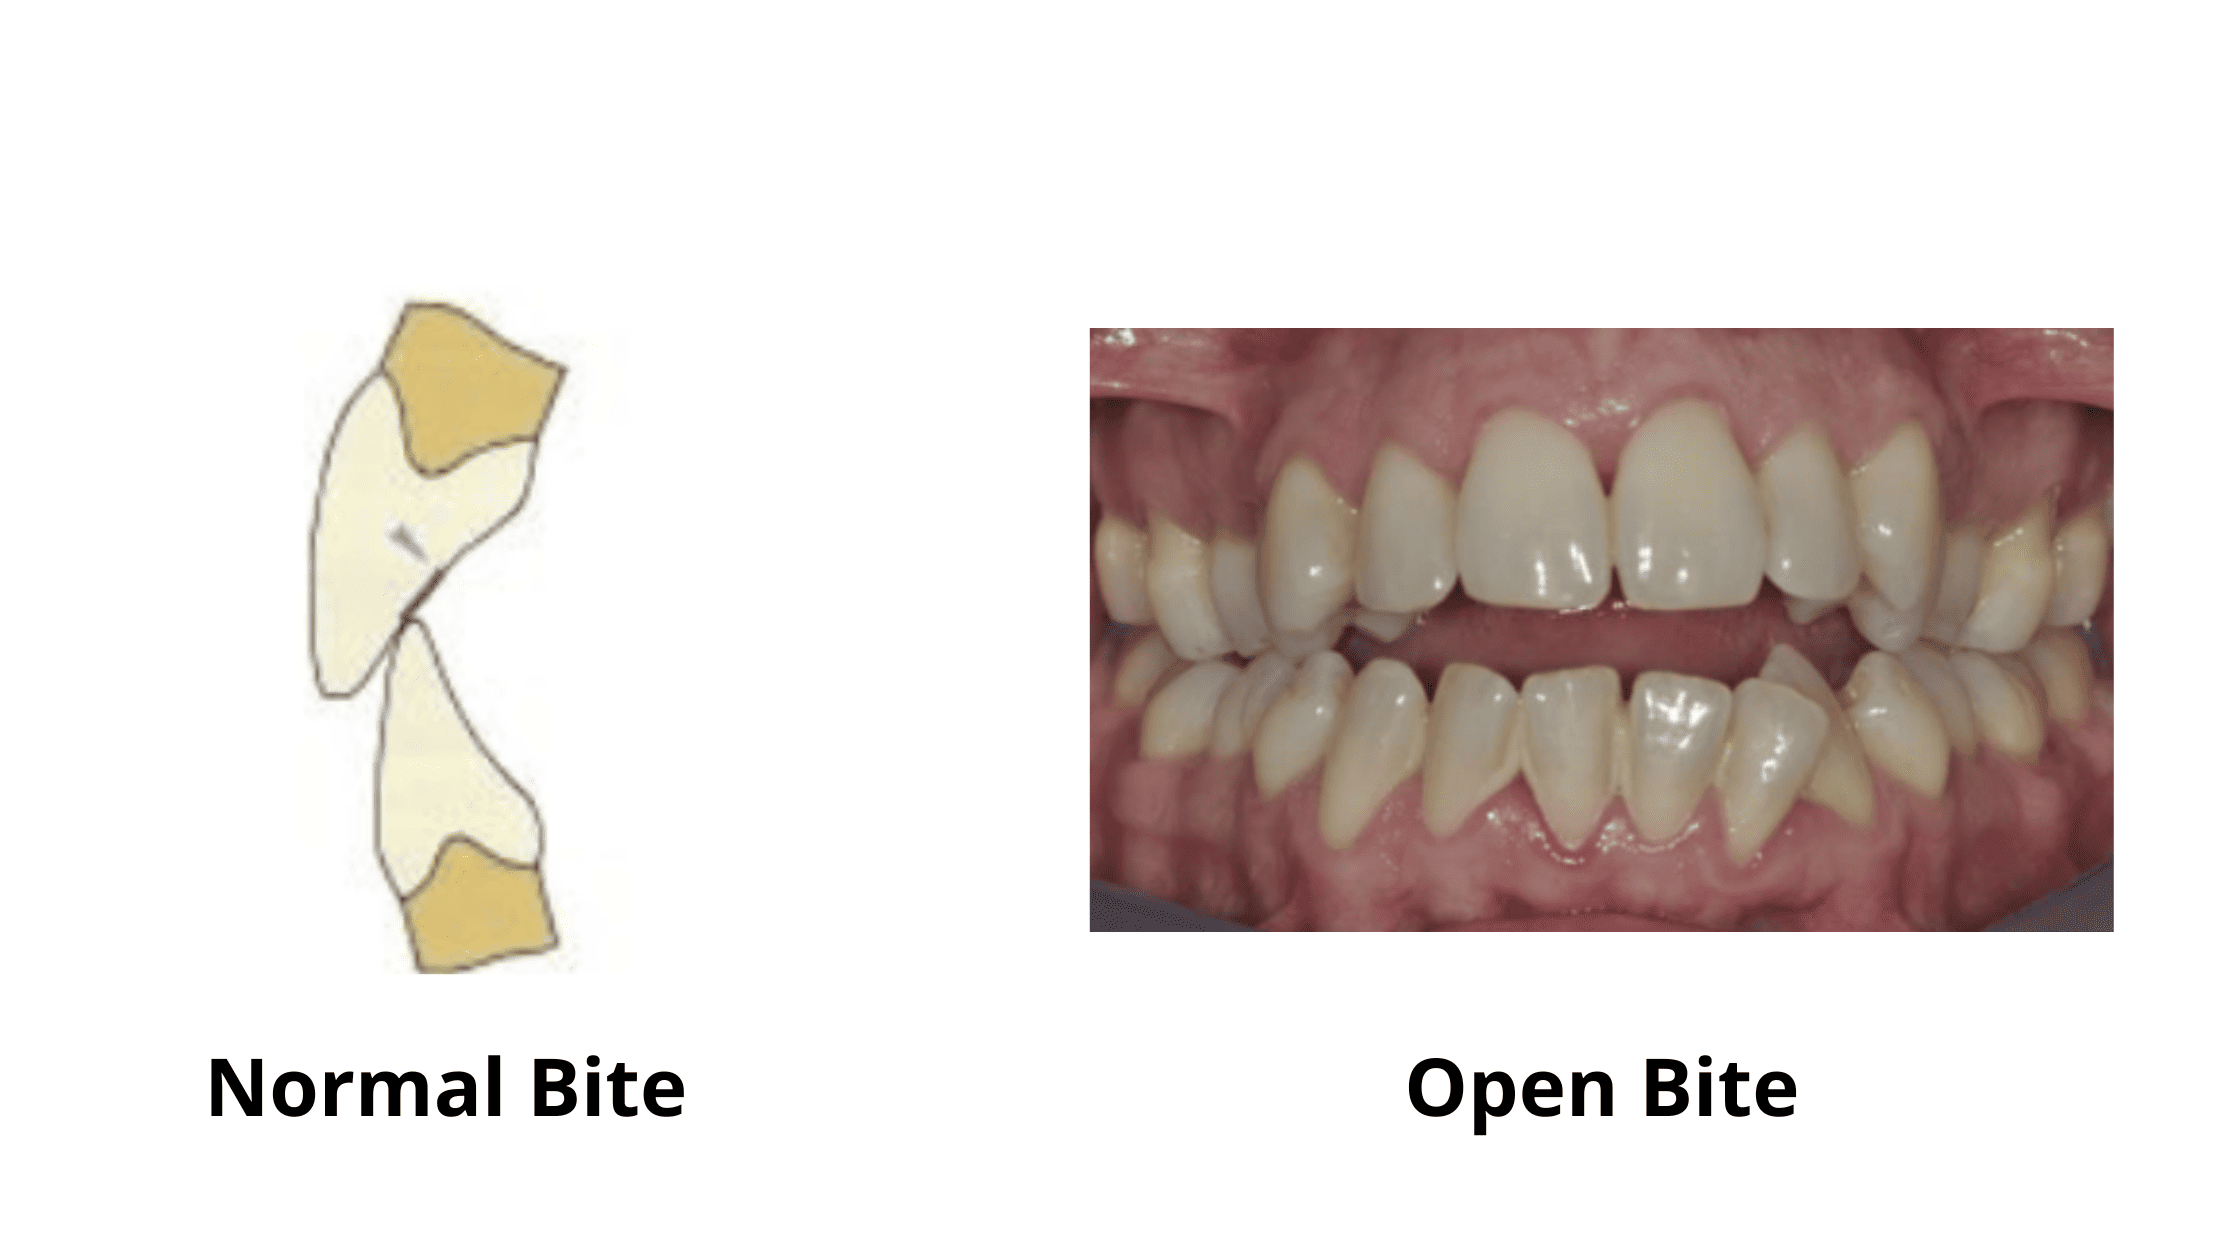 Normal bite vs Open bite